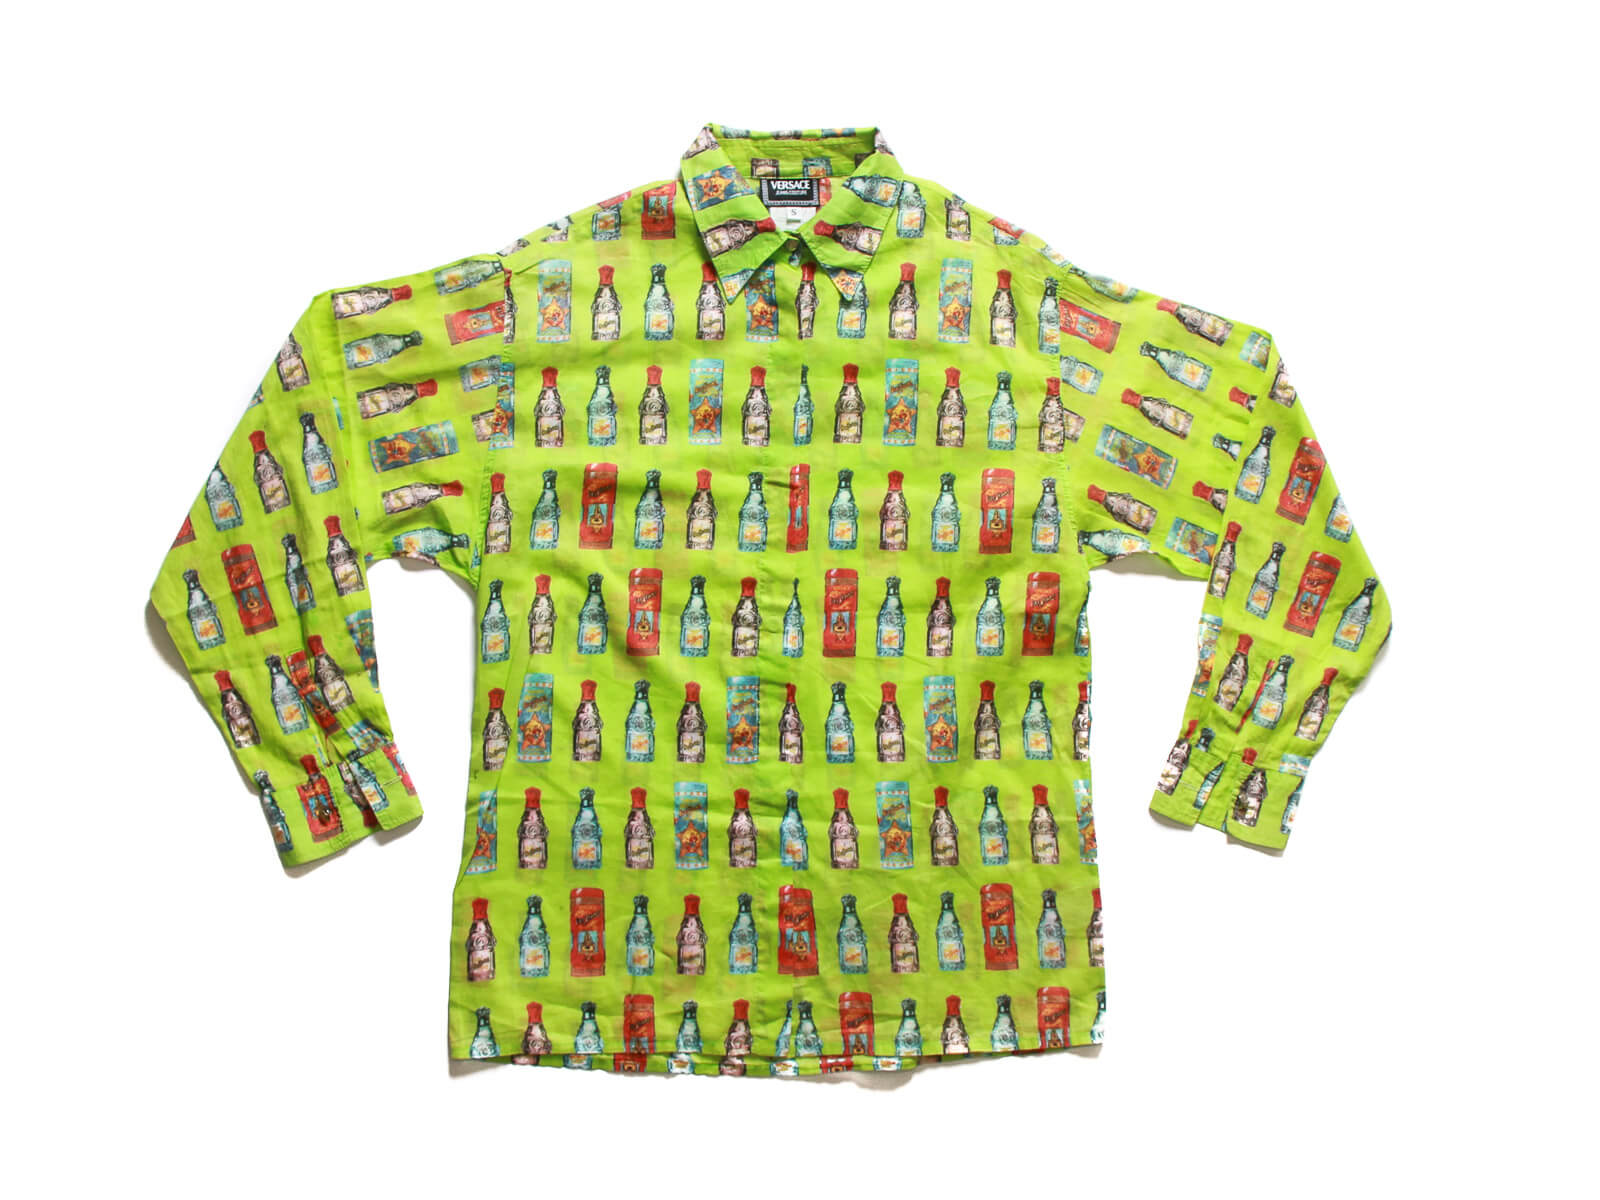 90s versace shirts